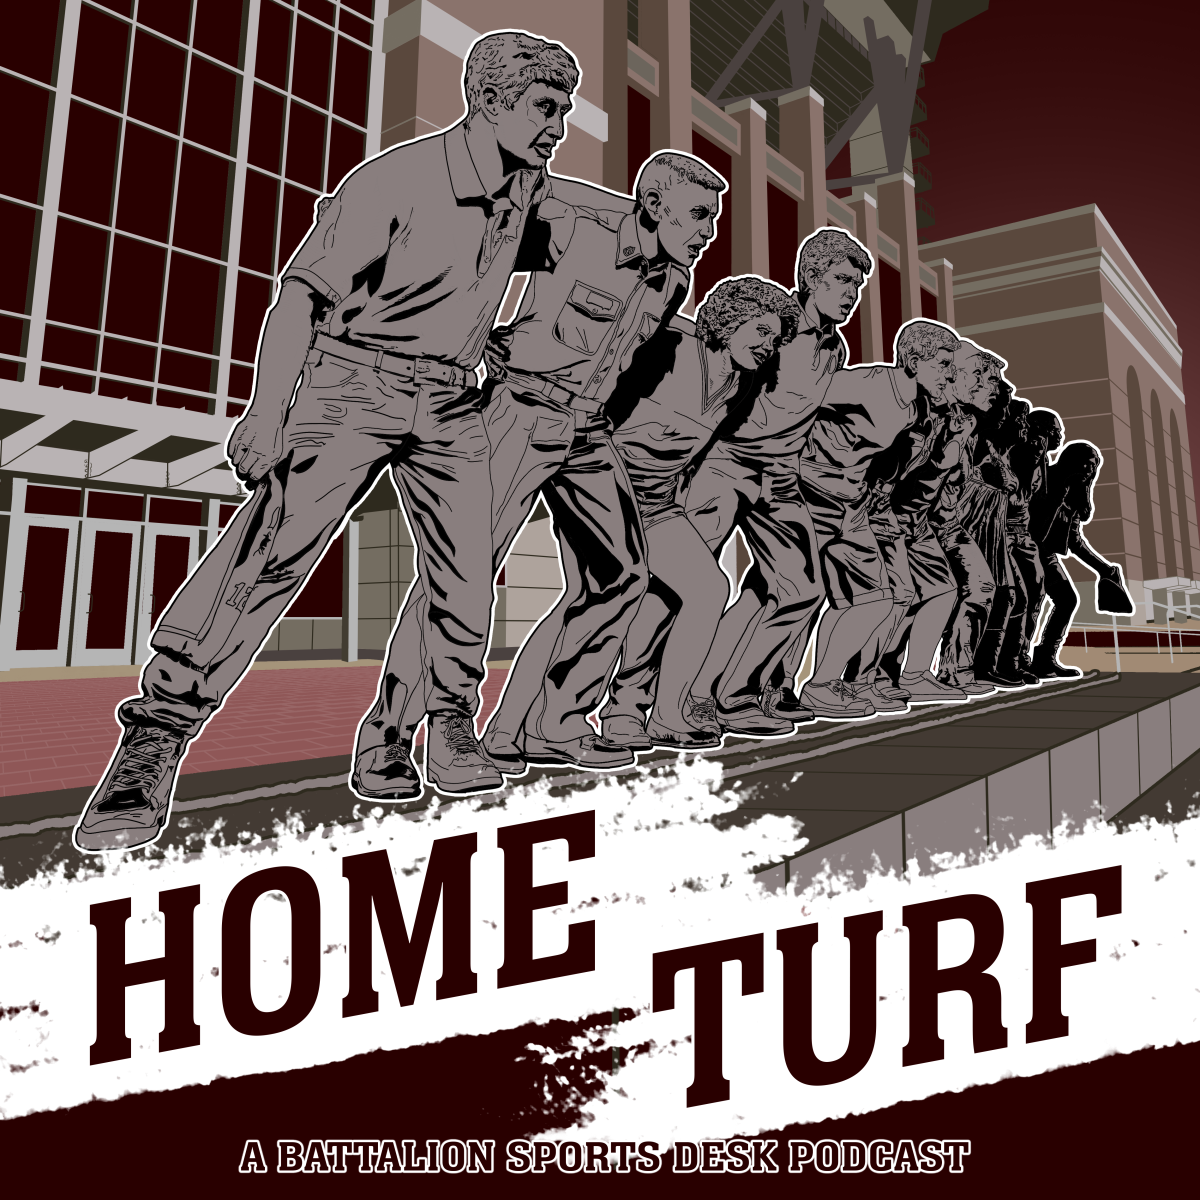 Home Turf podcast logo